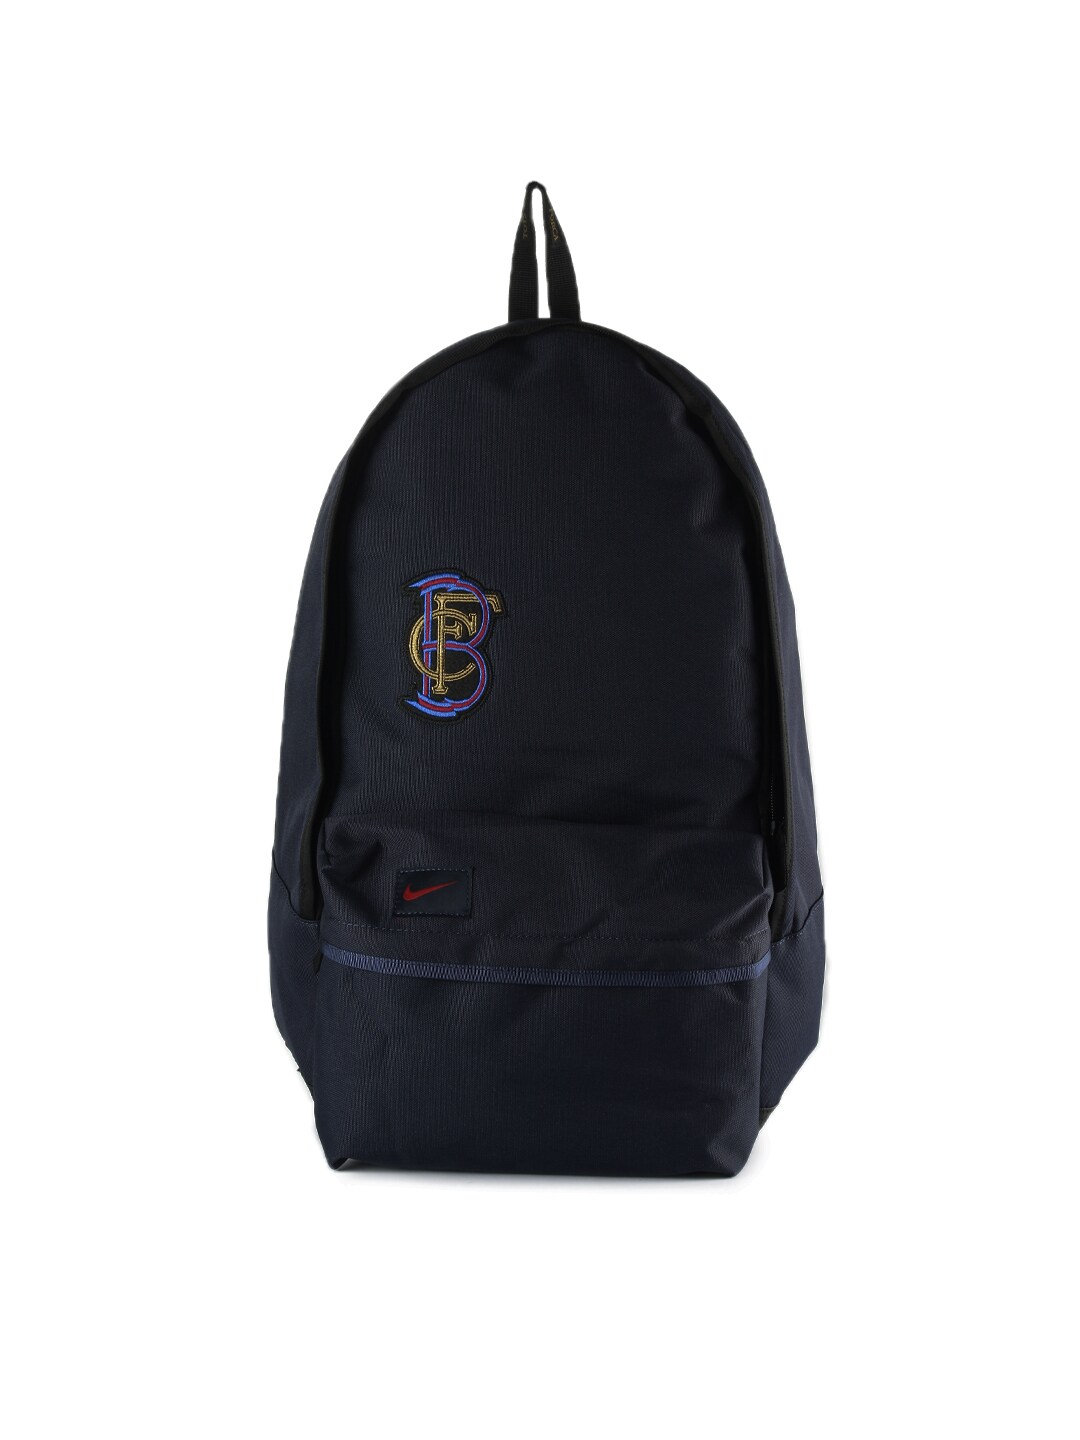 Nike Unisex Navy Blue Backpack